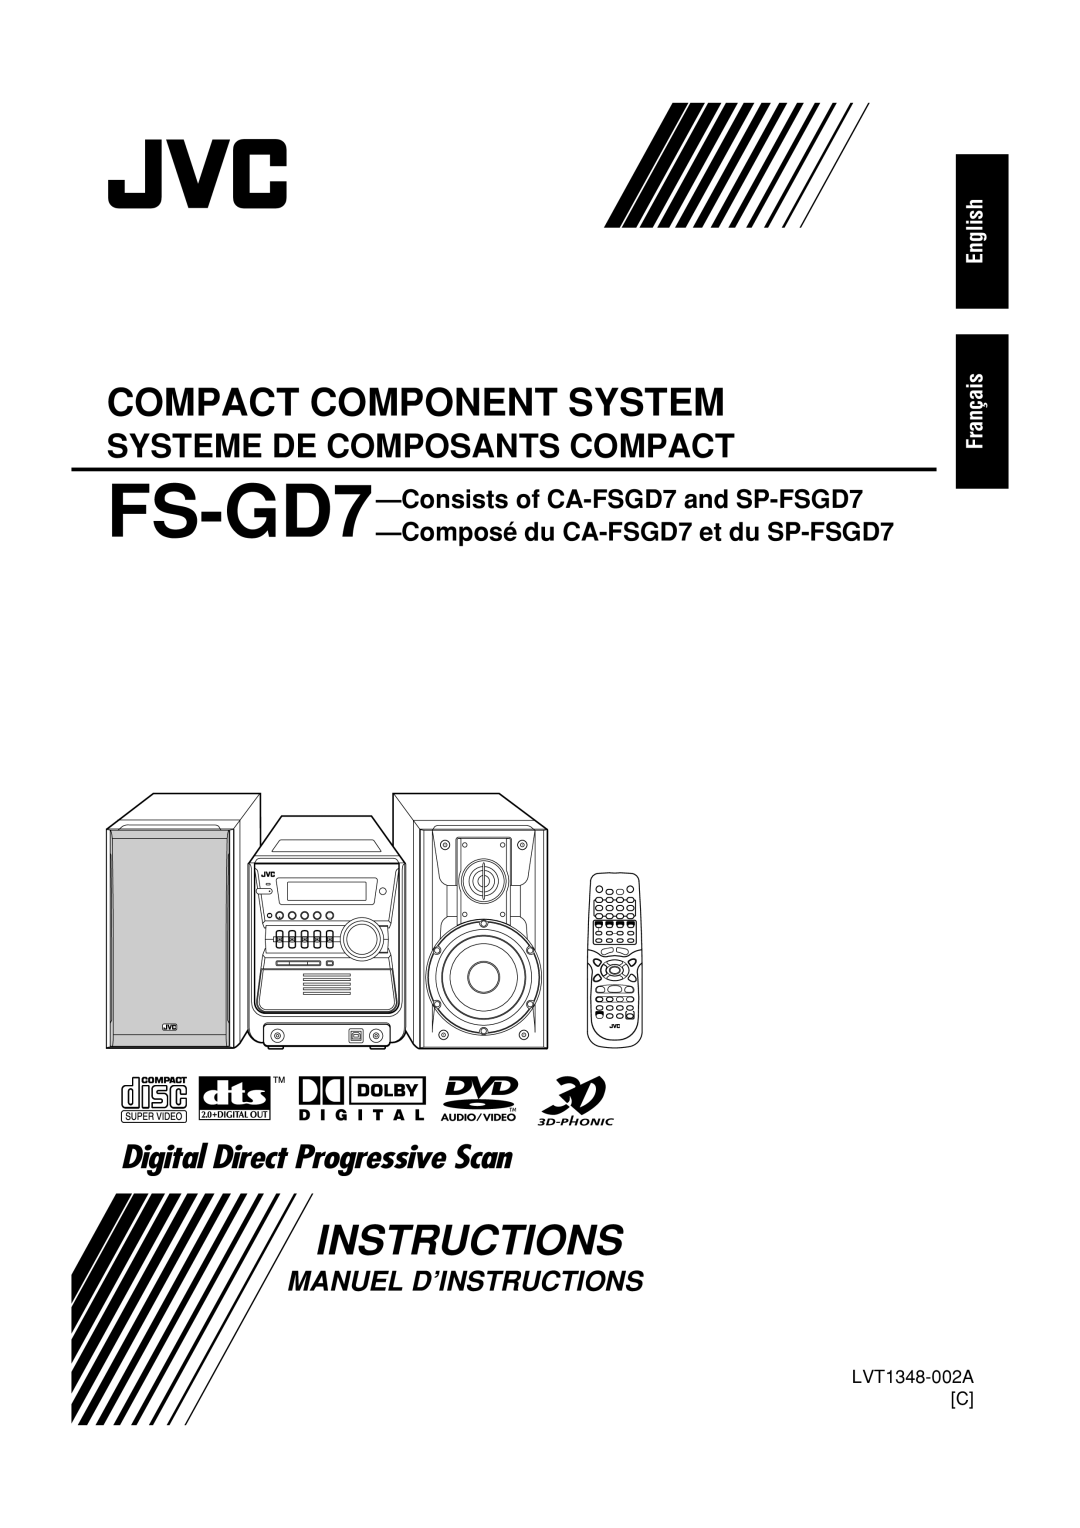 JVC LVT1348-001C, SP-FSGD7 Manuel D’Instructions, English Français, LVT1348-002AC, Compact Component System, D I G I T A L 